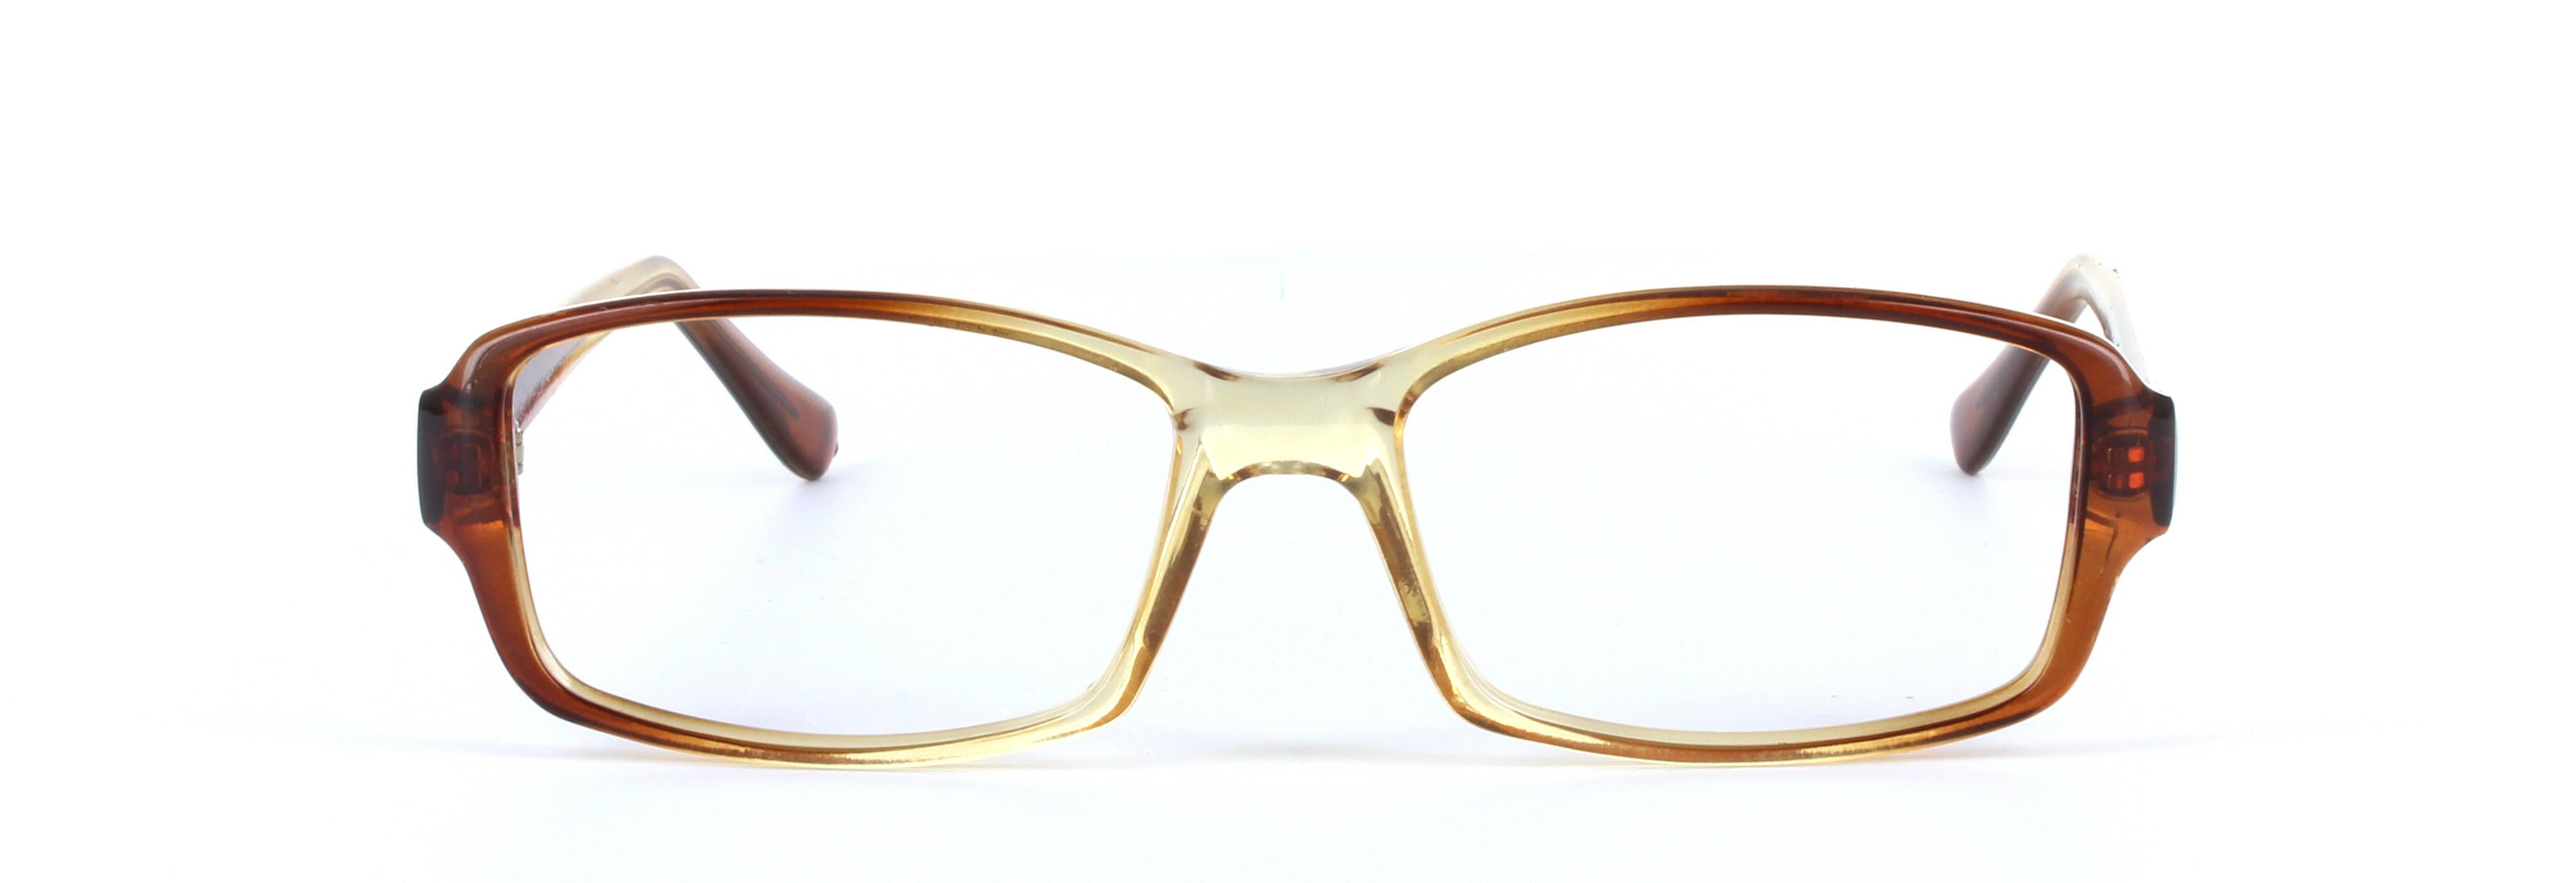 Chico Brown Full Rim Rectangular Plastic Glasses - Image View 5